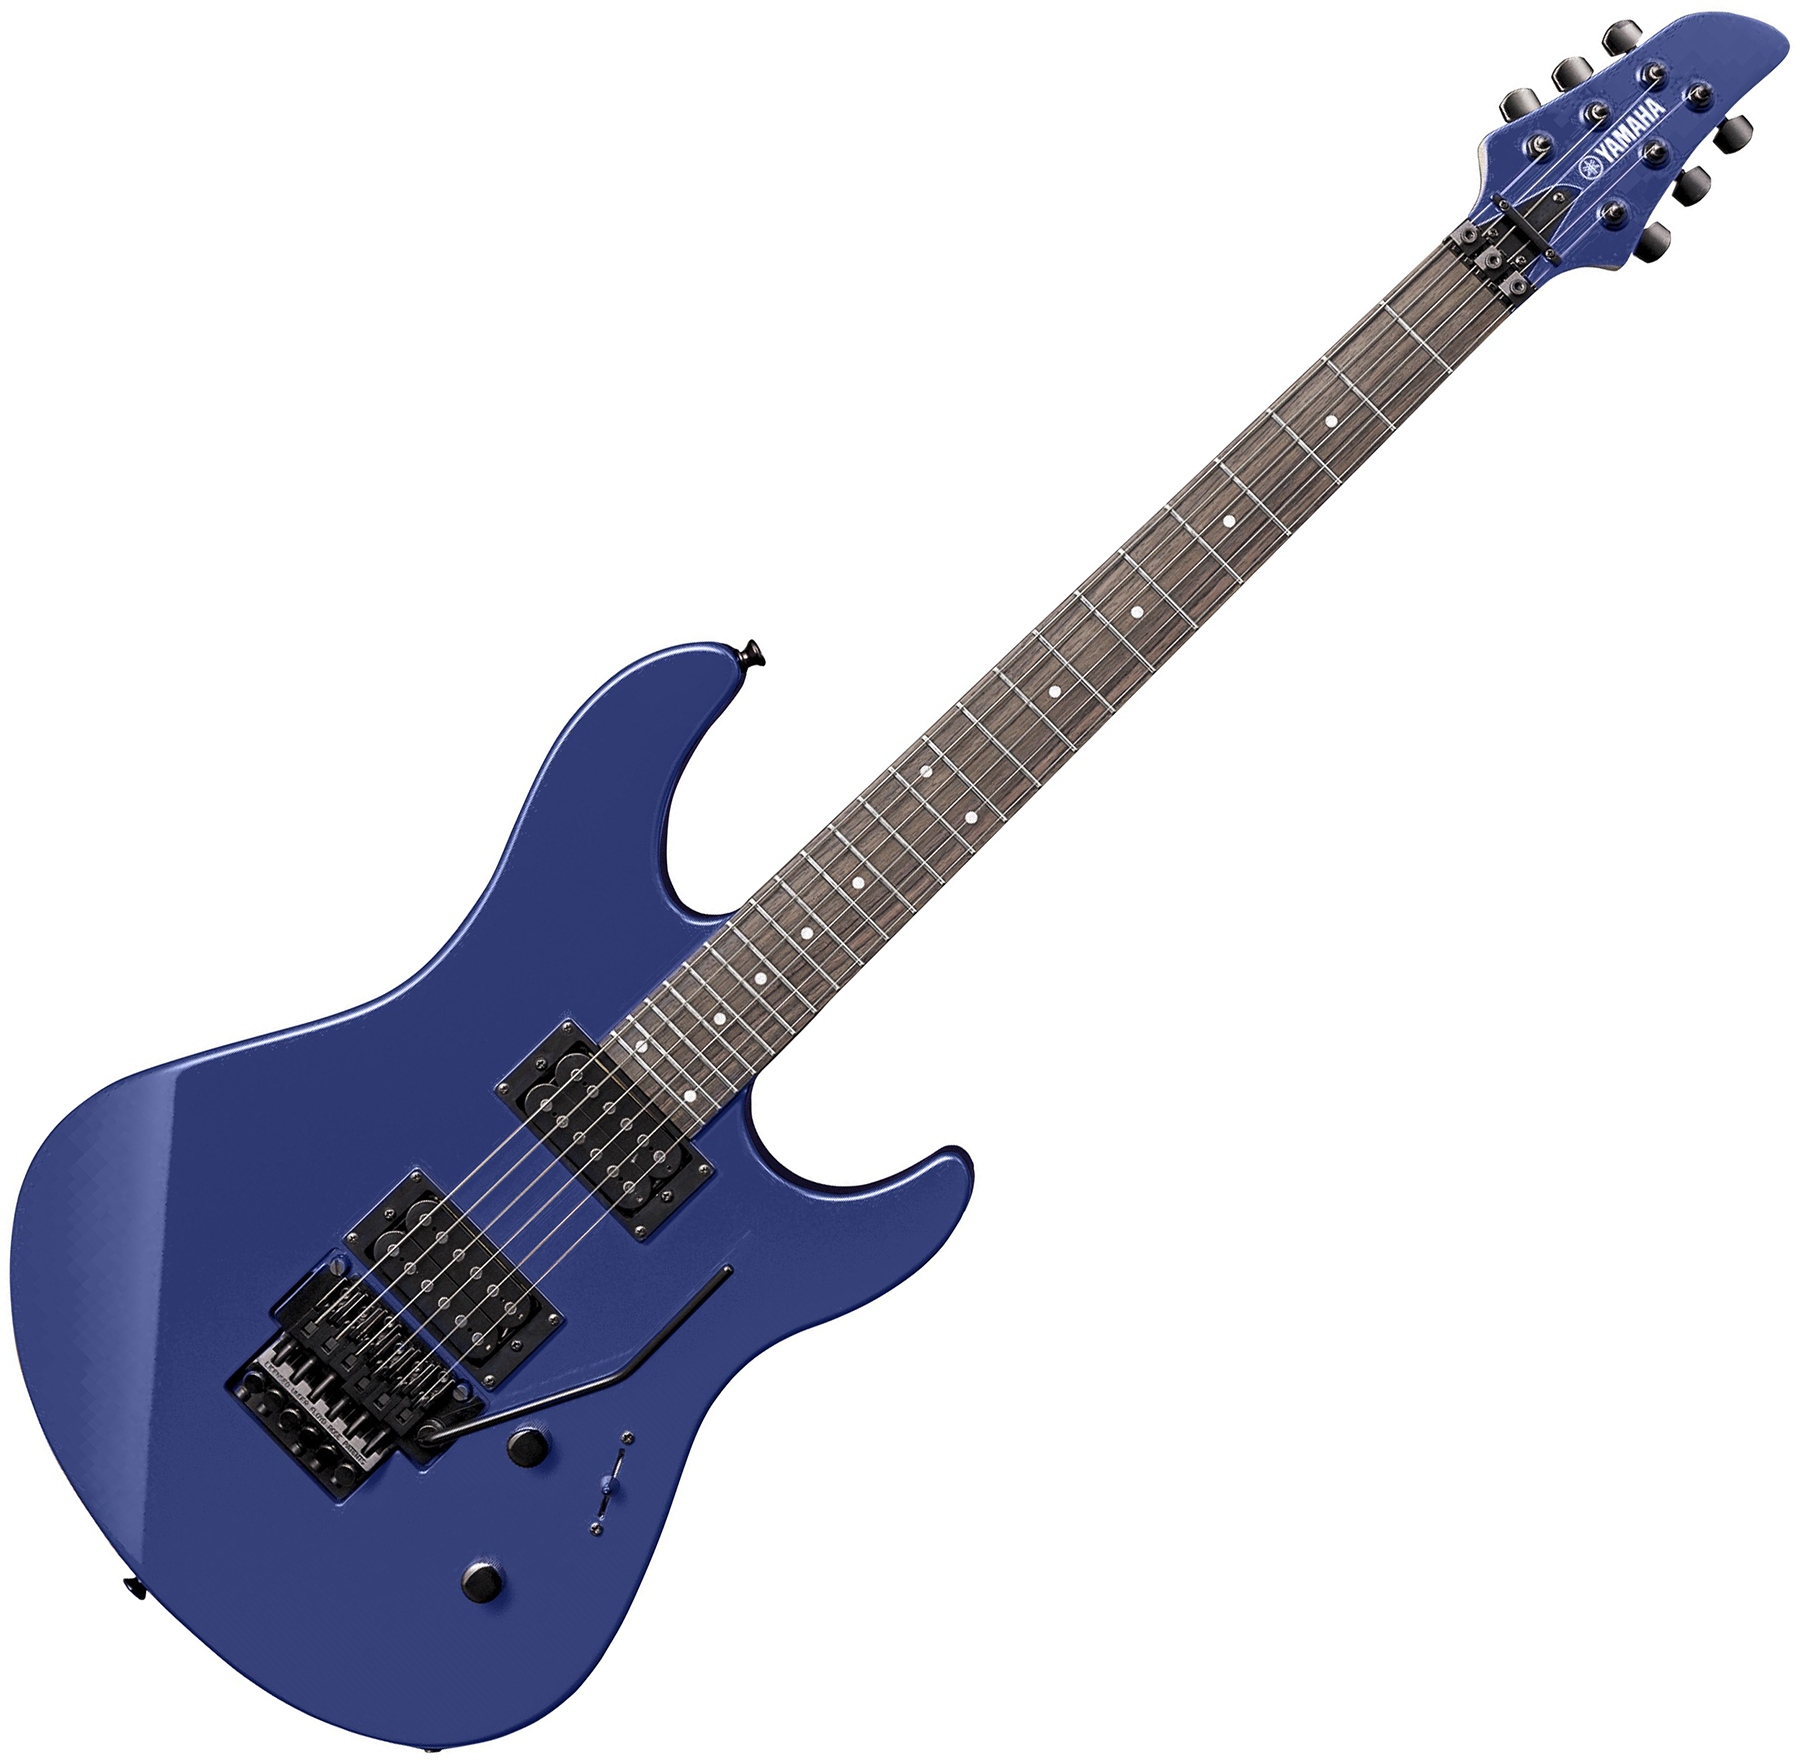 yamaha-rgx220dz-metallic-blue-guitare-lectrique-solid-body-bleu